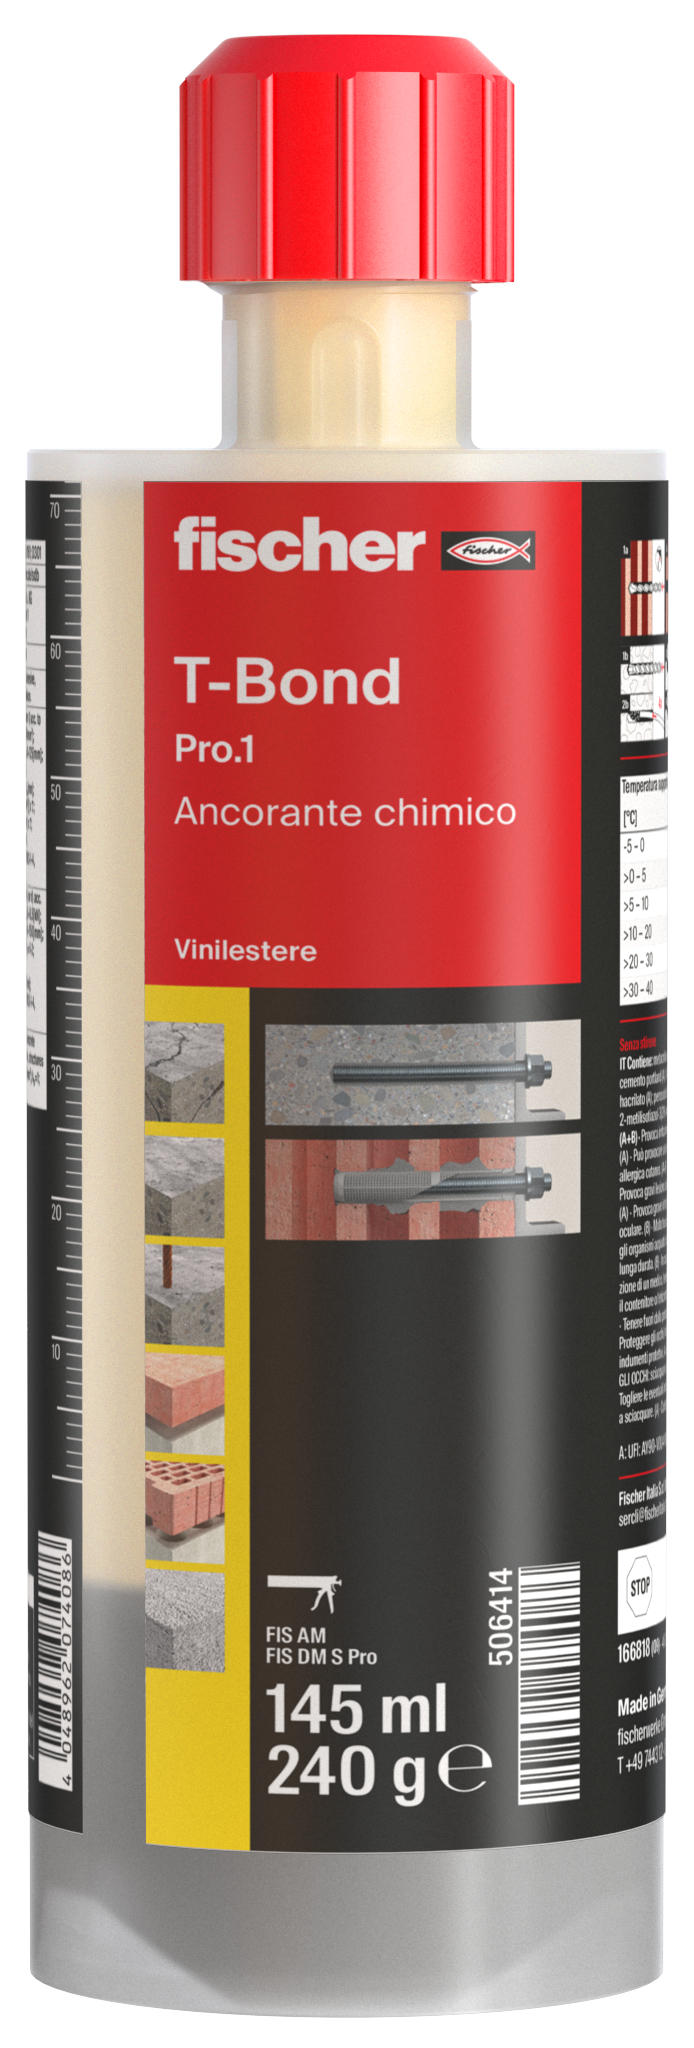 fischer Ancorante chimico T-BOND PRO.1 150 resina hybrid in busta (1 Pz.) fie1815.